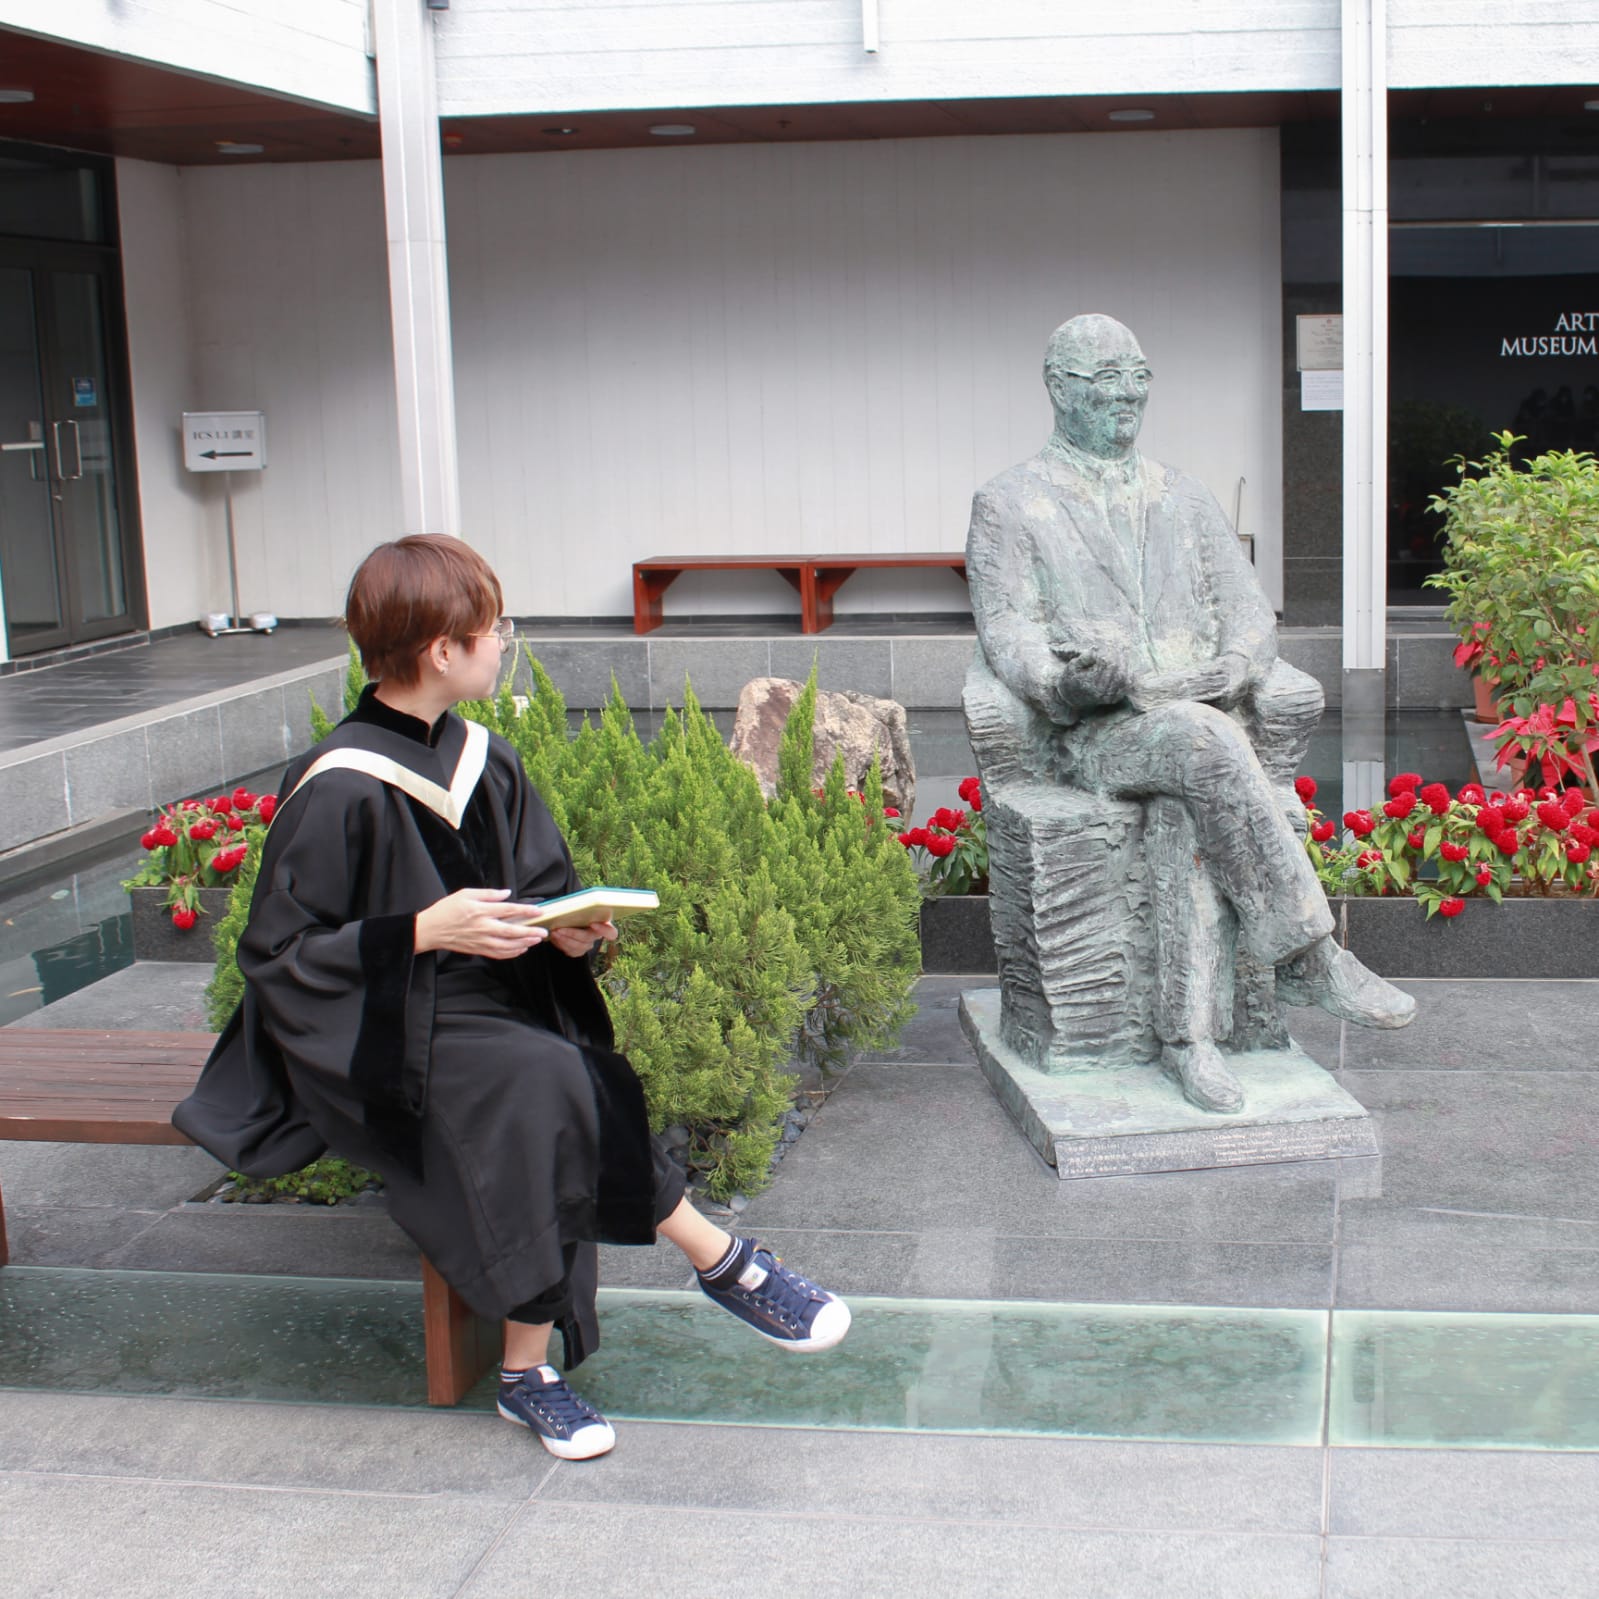 WONG Tak Yin, BA in Cultural Studies, 2020 Graduate